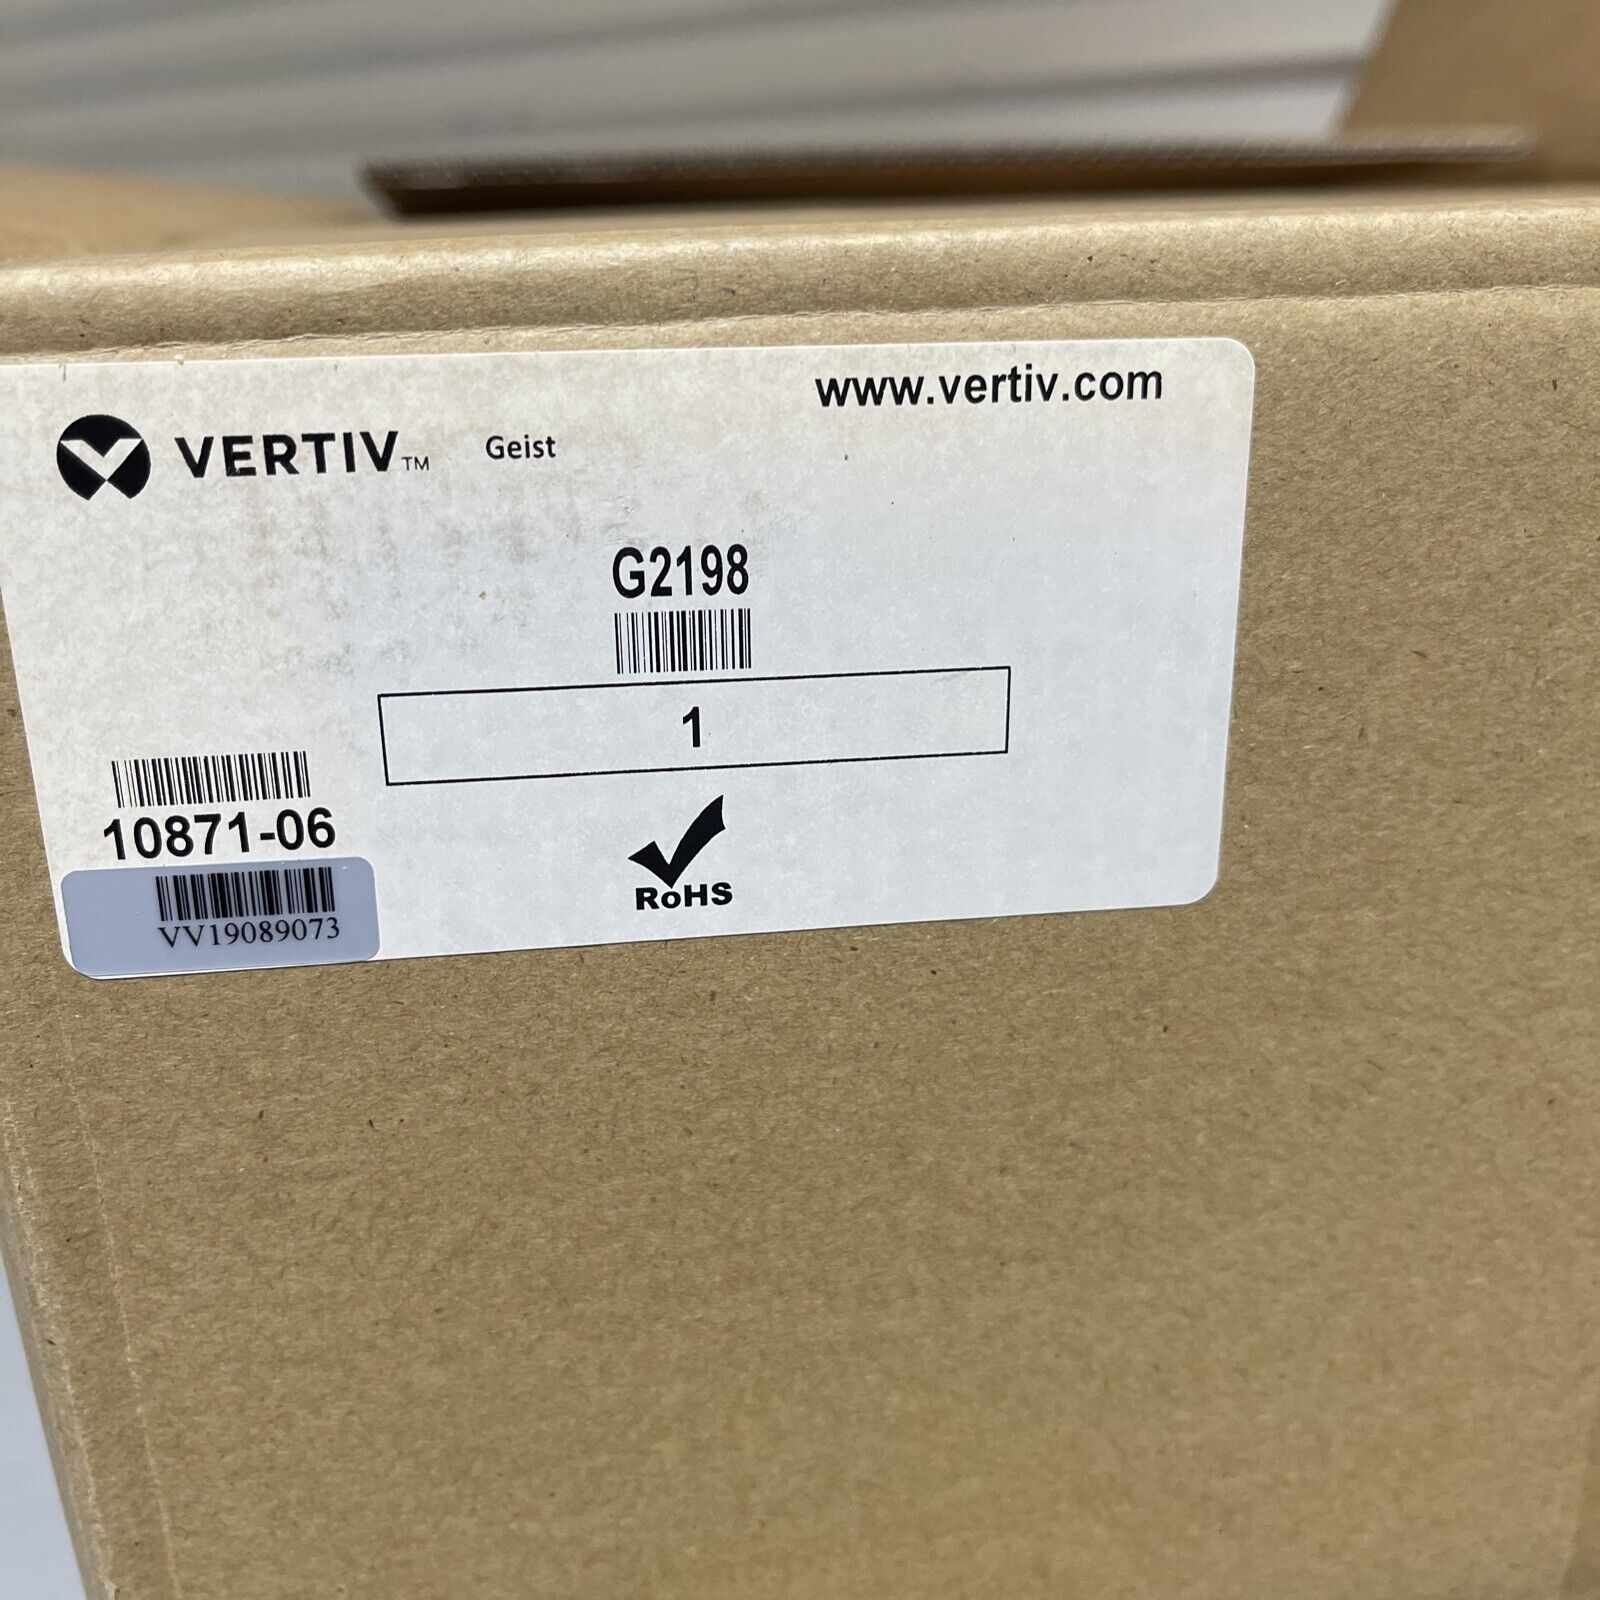 Vertiv Geist G2198 PDU Brand New Factory Sealed